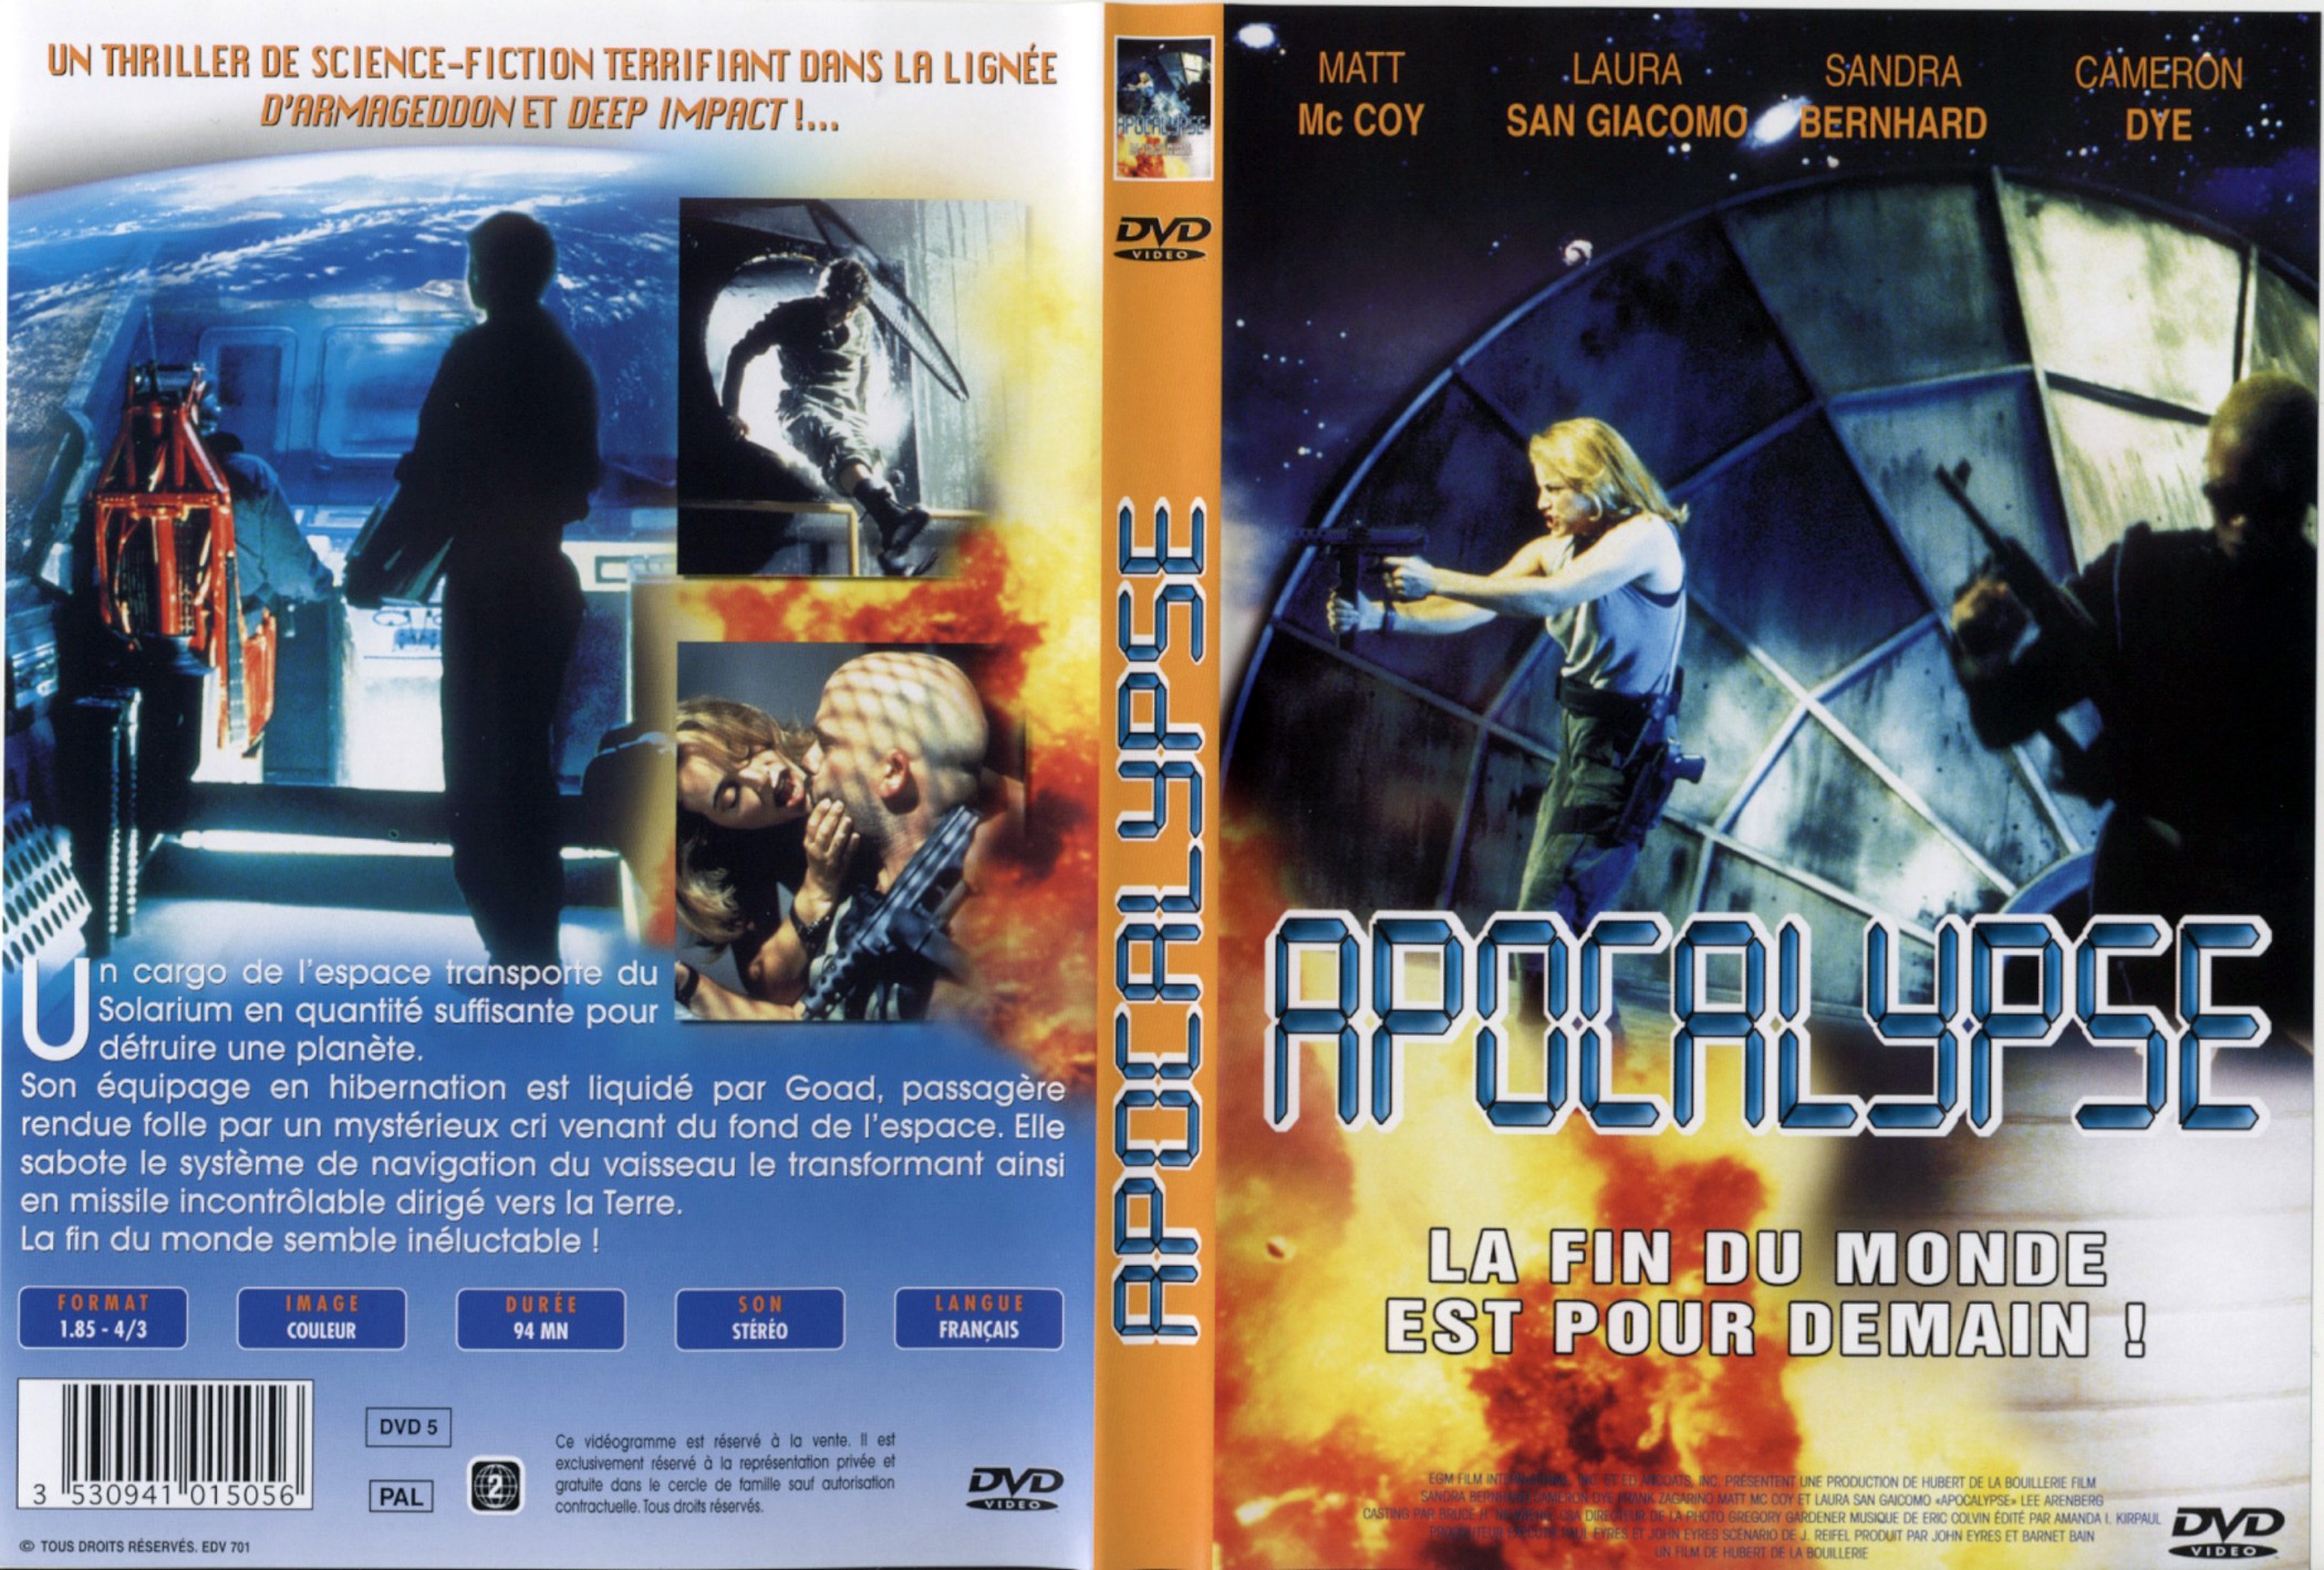 Jaquette DVD Apocalypse